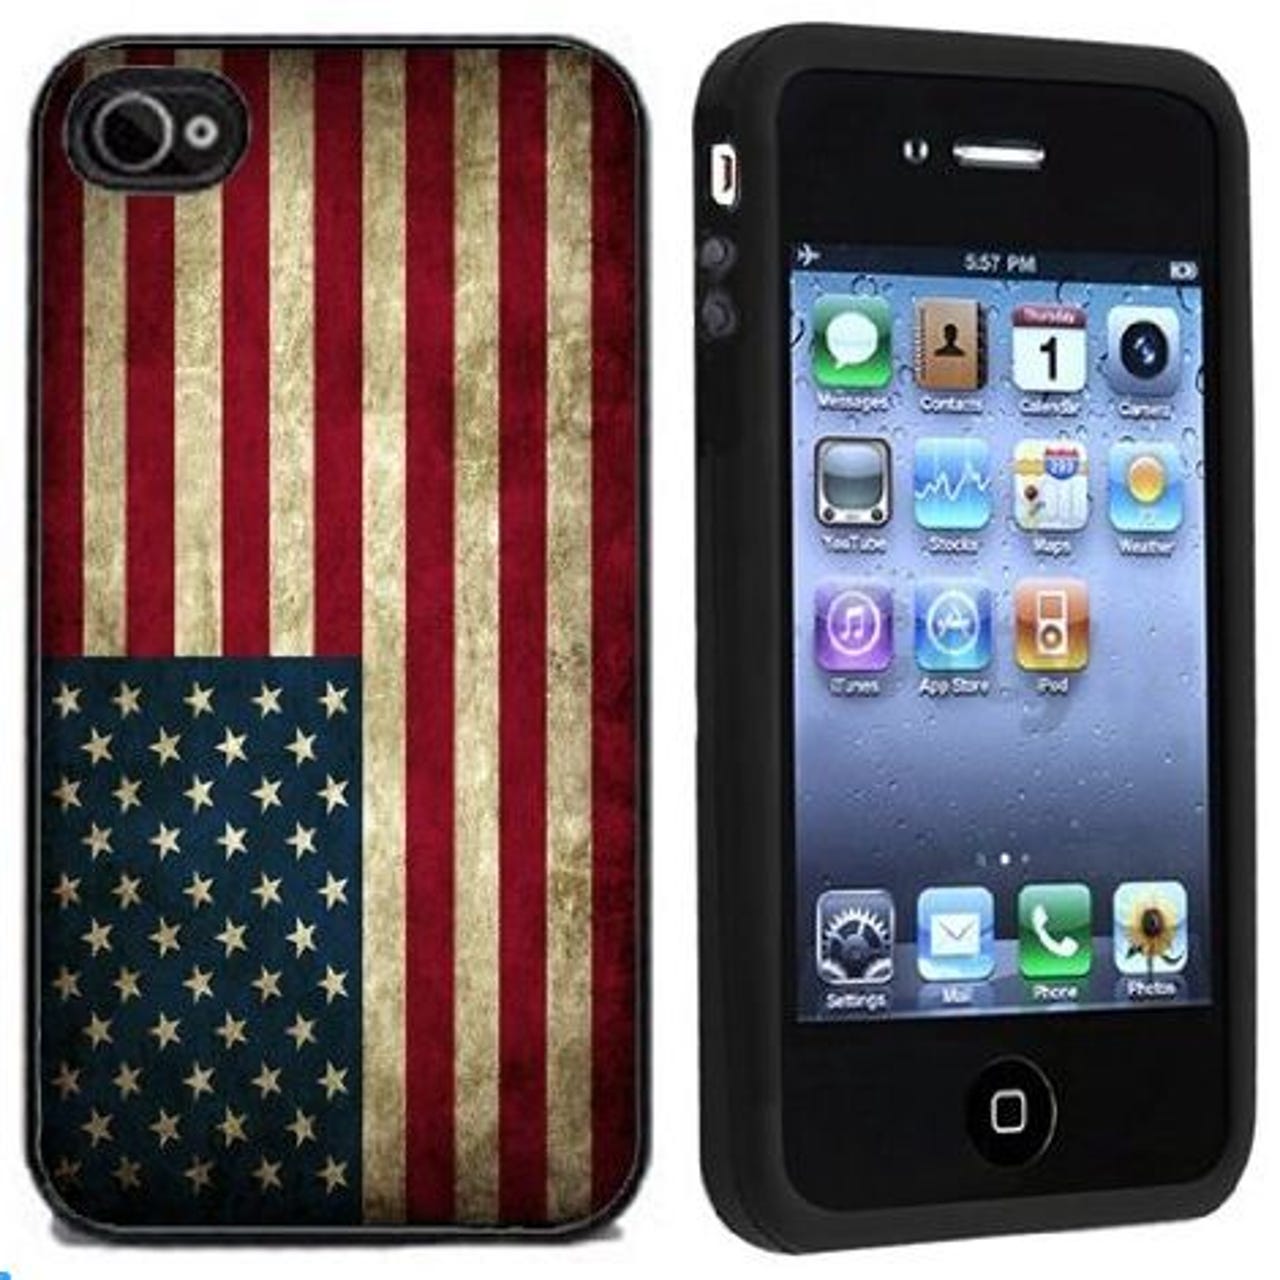 04-american-flag-iphone-4-case.jpg